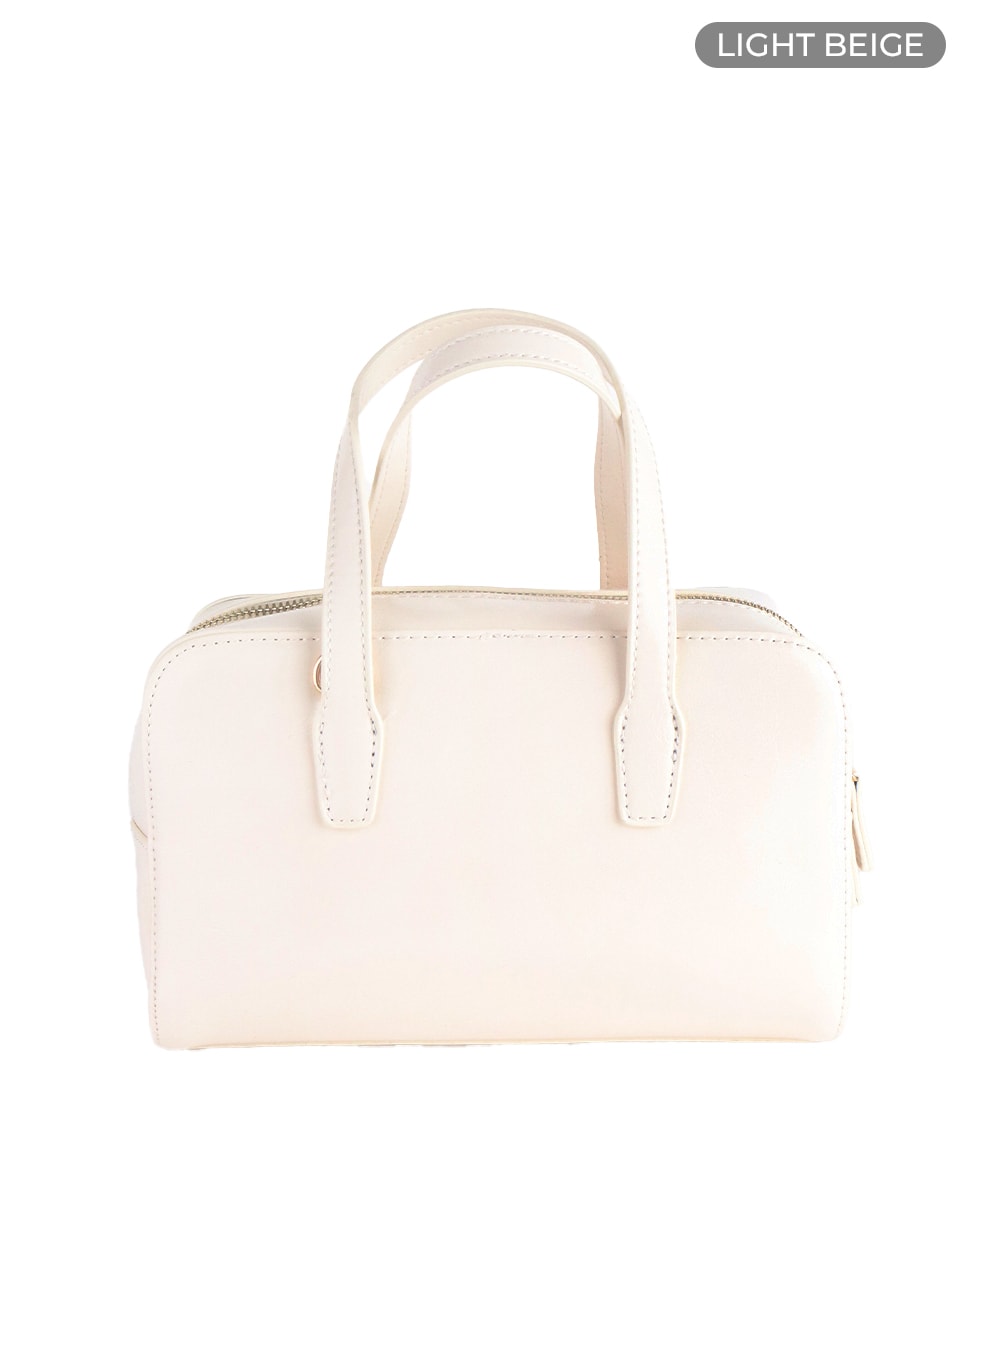 square-boston-handbag-cm413 / Light beige